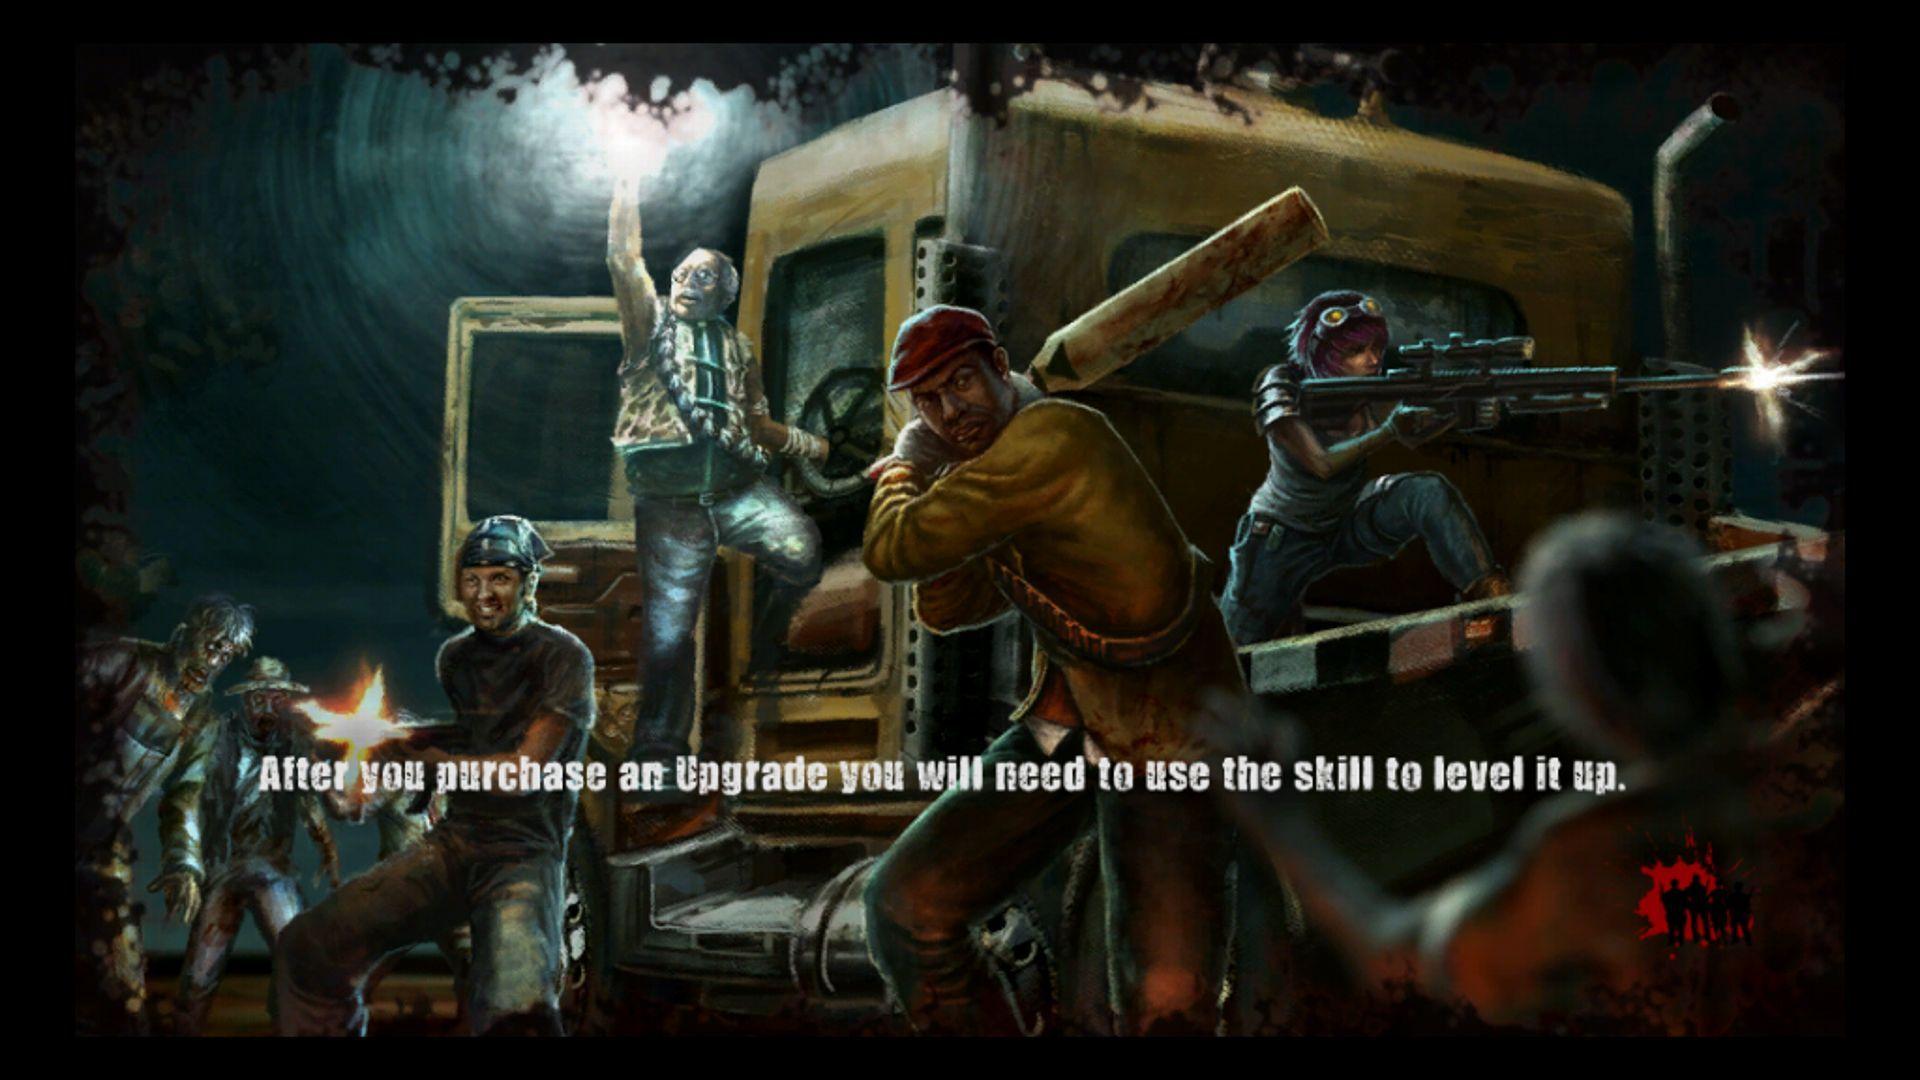 Zombie Apocalypse: Never Die Alone Screenshots, Picture, Wallpaper